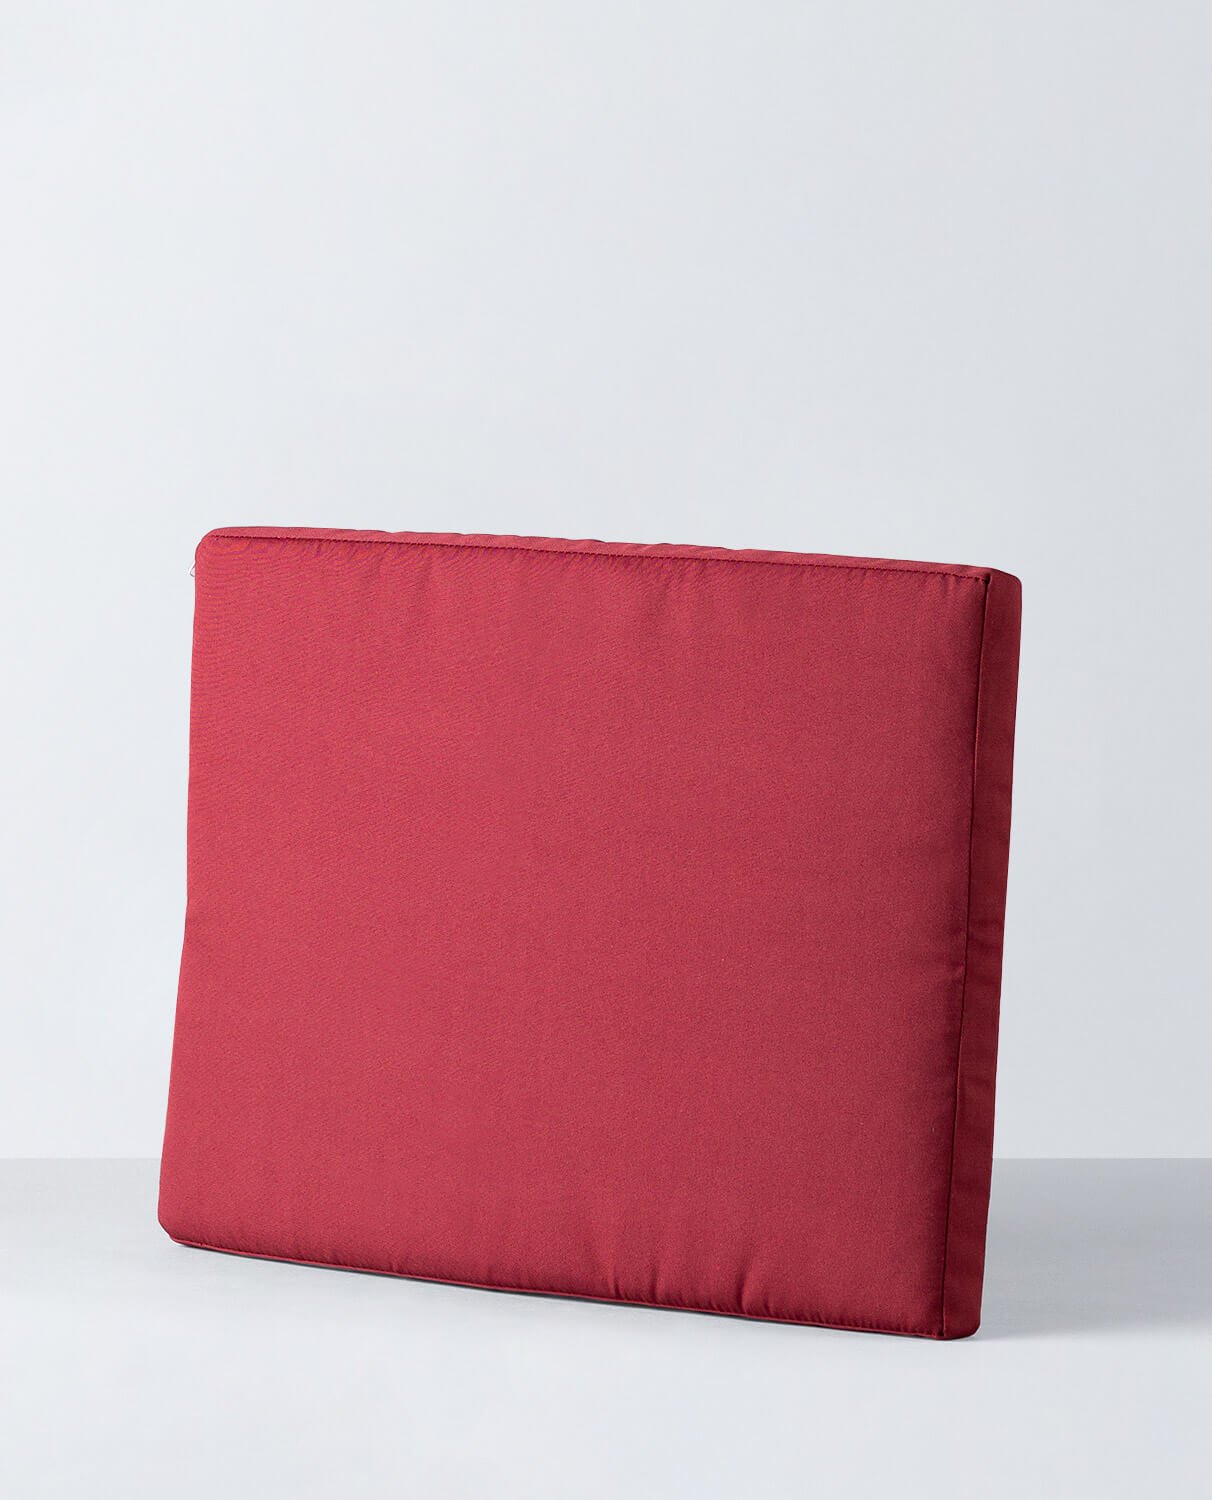 Cojín Rectangular de Tela (42x59,5 cm) para Silla Roys Rojo Chili - The Masie